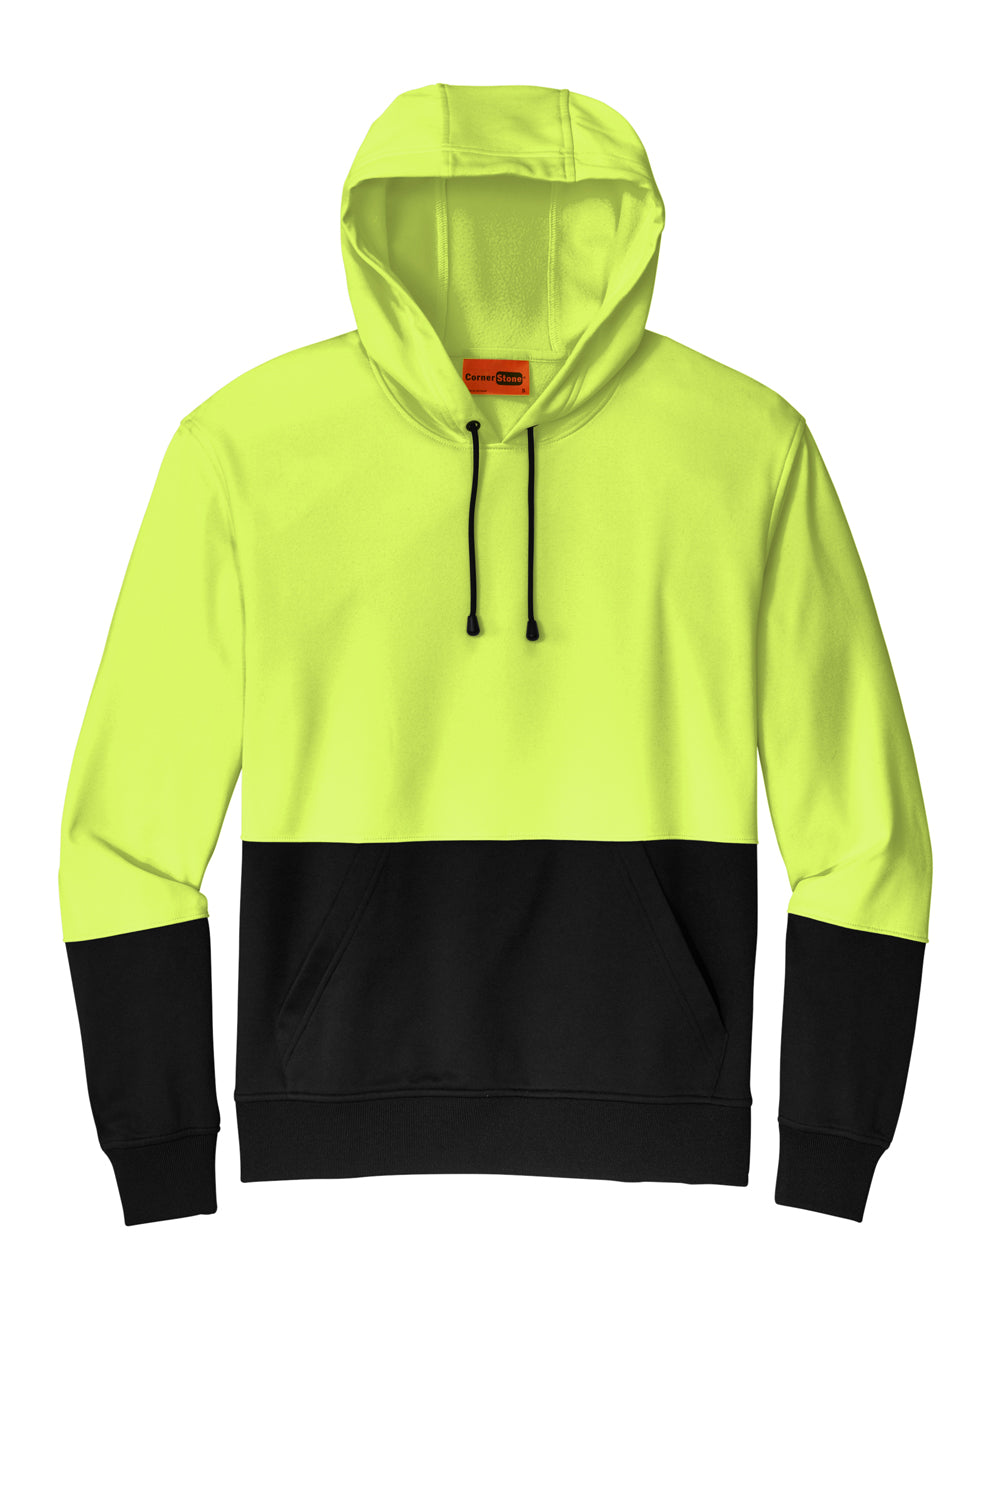 CornerStone CSF01 Enhanced Visibility Fleece Hooded Sweatshirt Hoodie Safety Yellow Flat Front